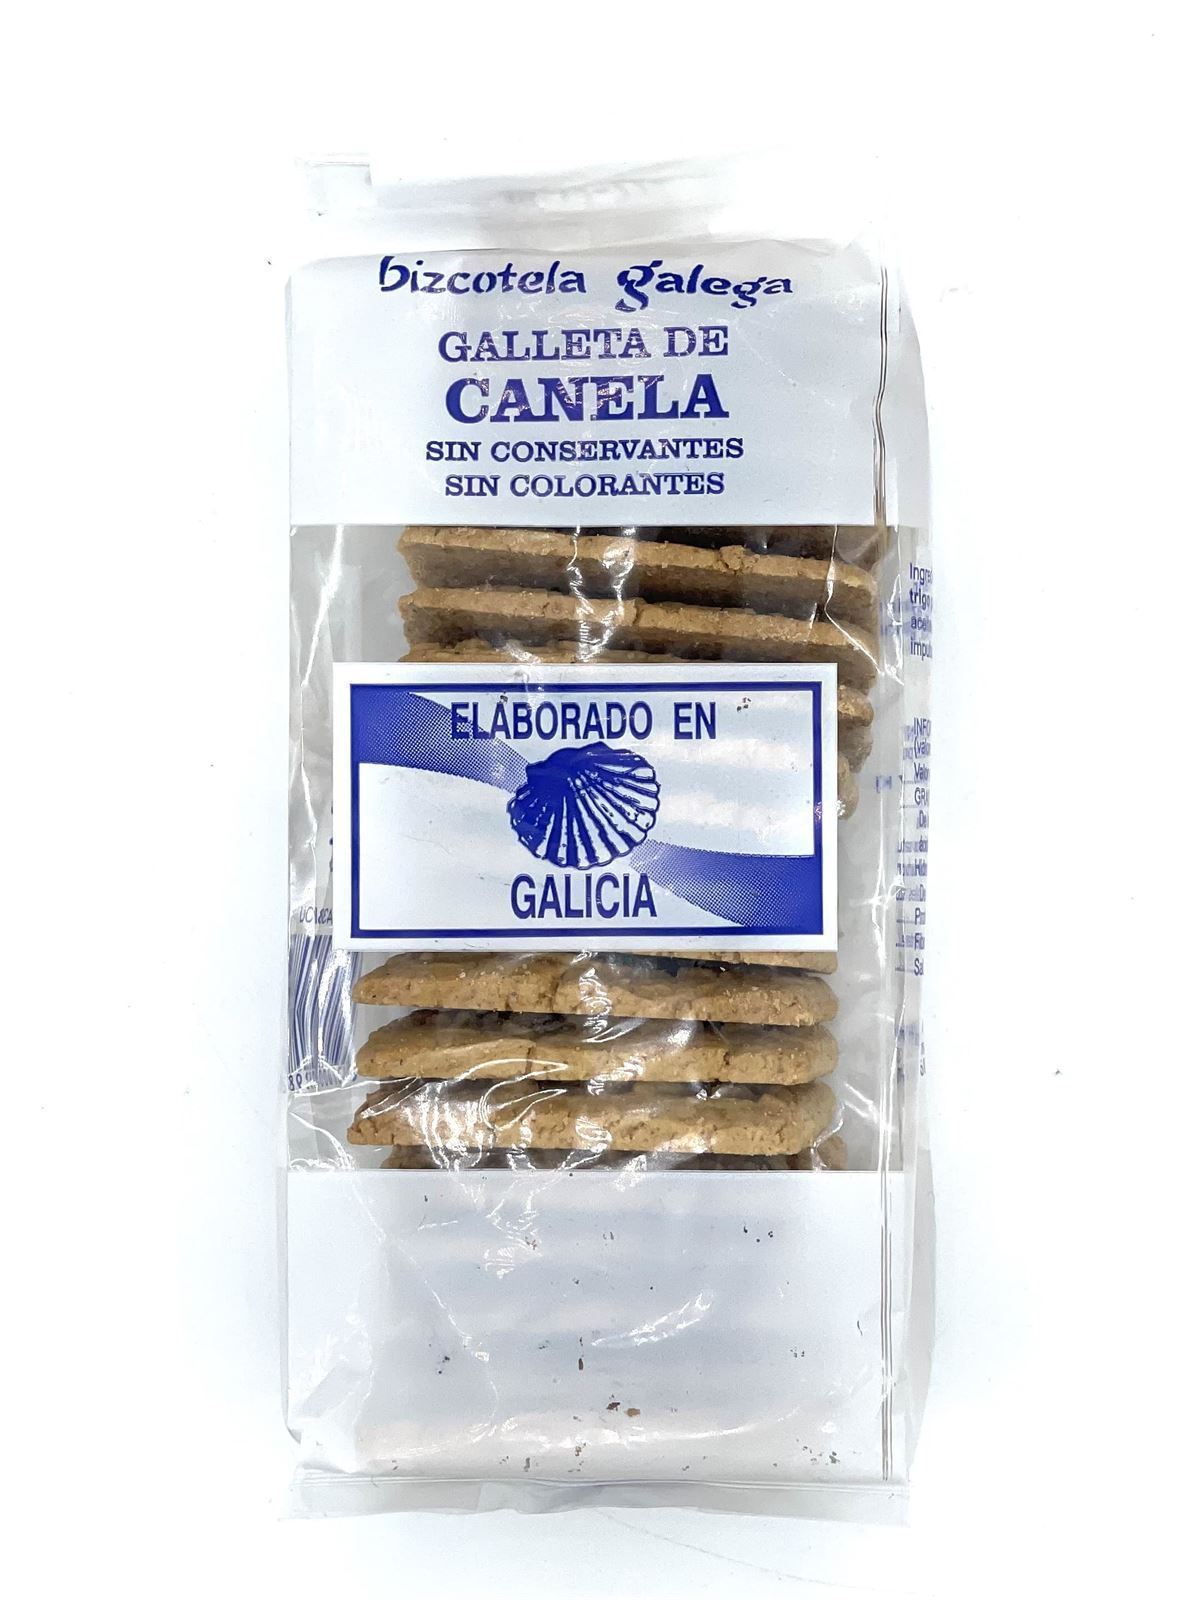 GALLETAS DE CANELA BIZCOTELA GALEGA 240grs - Imagen 1